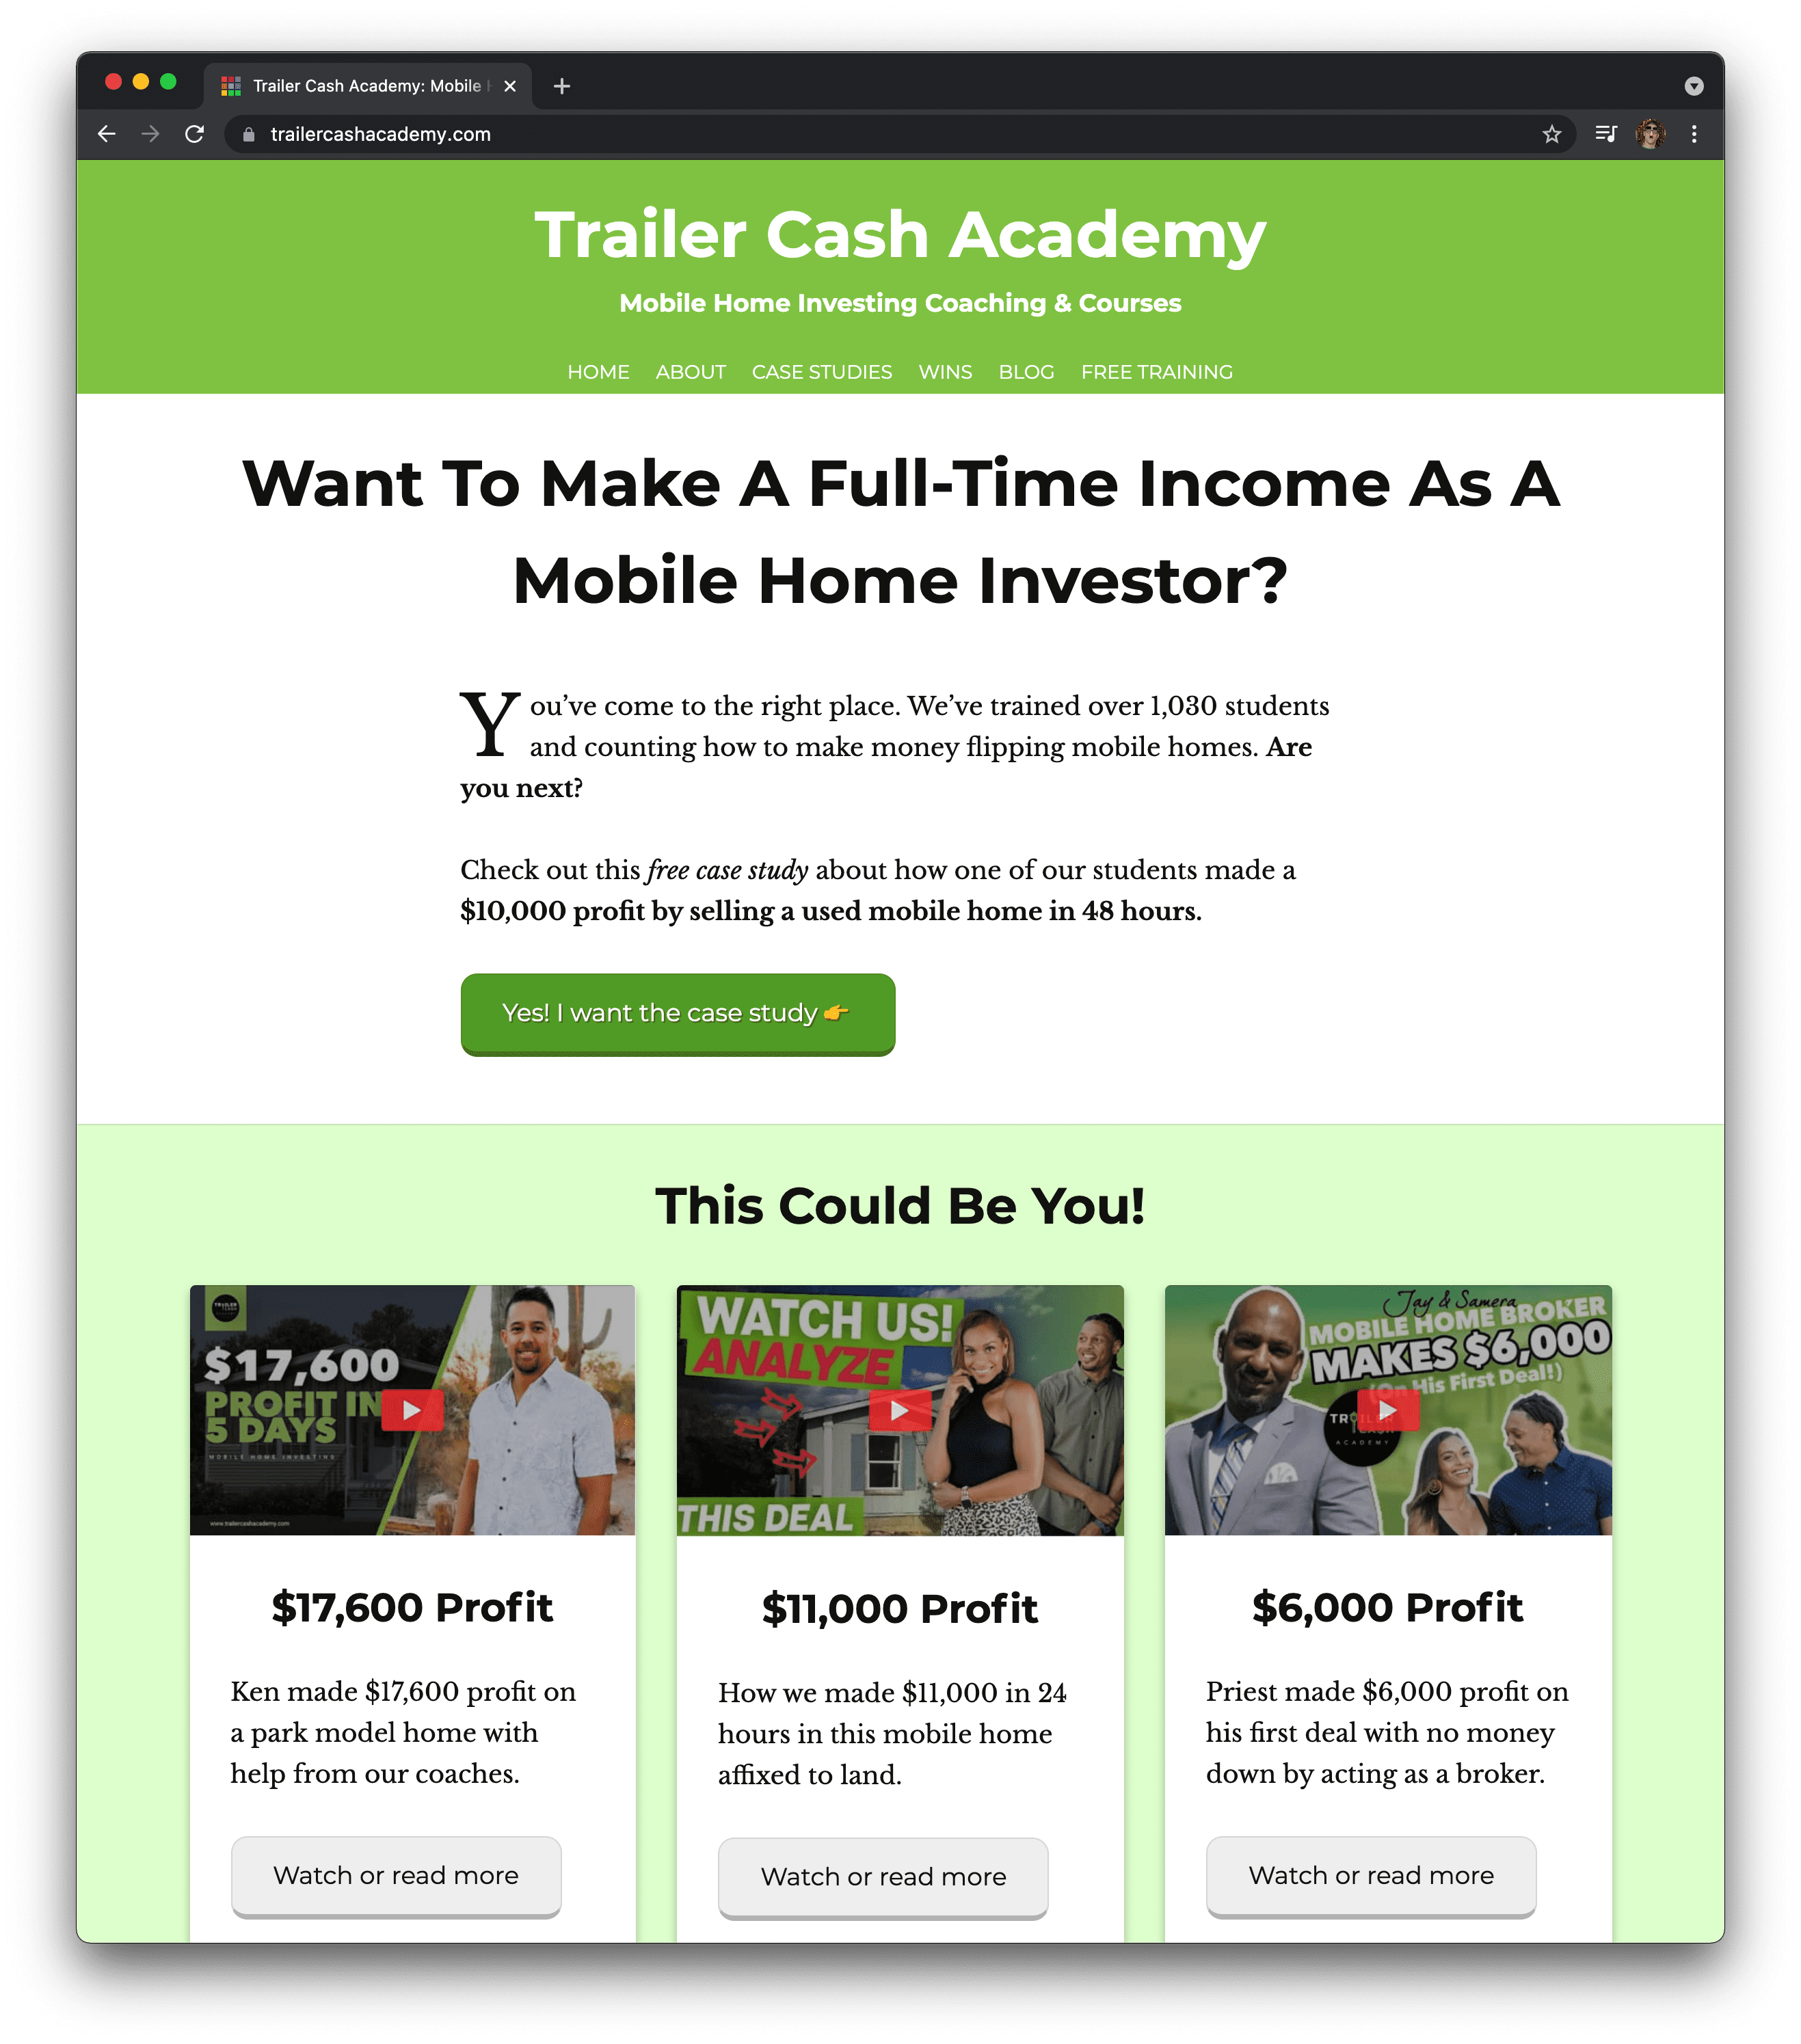 Trailer Cash Academy runs on the Focus WordPress Theme